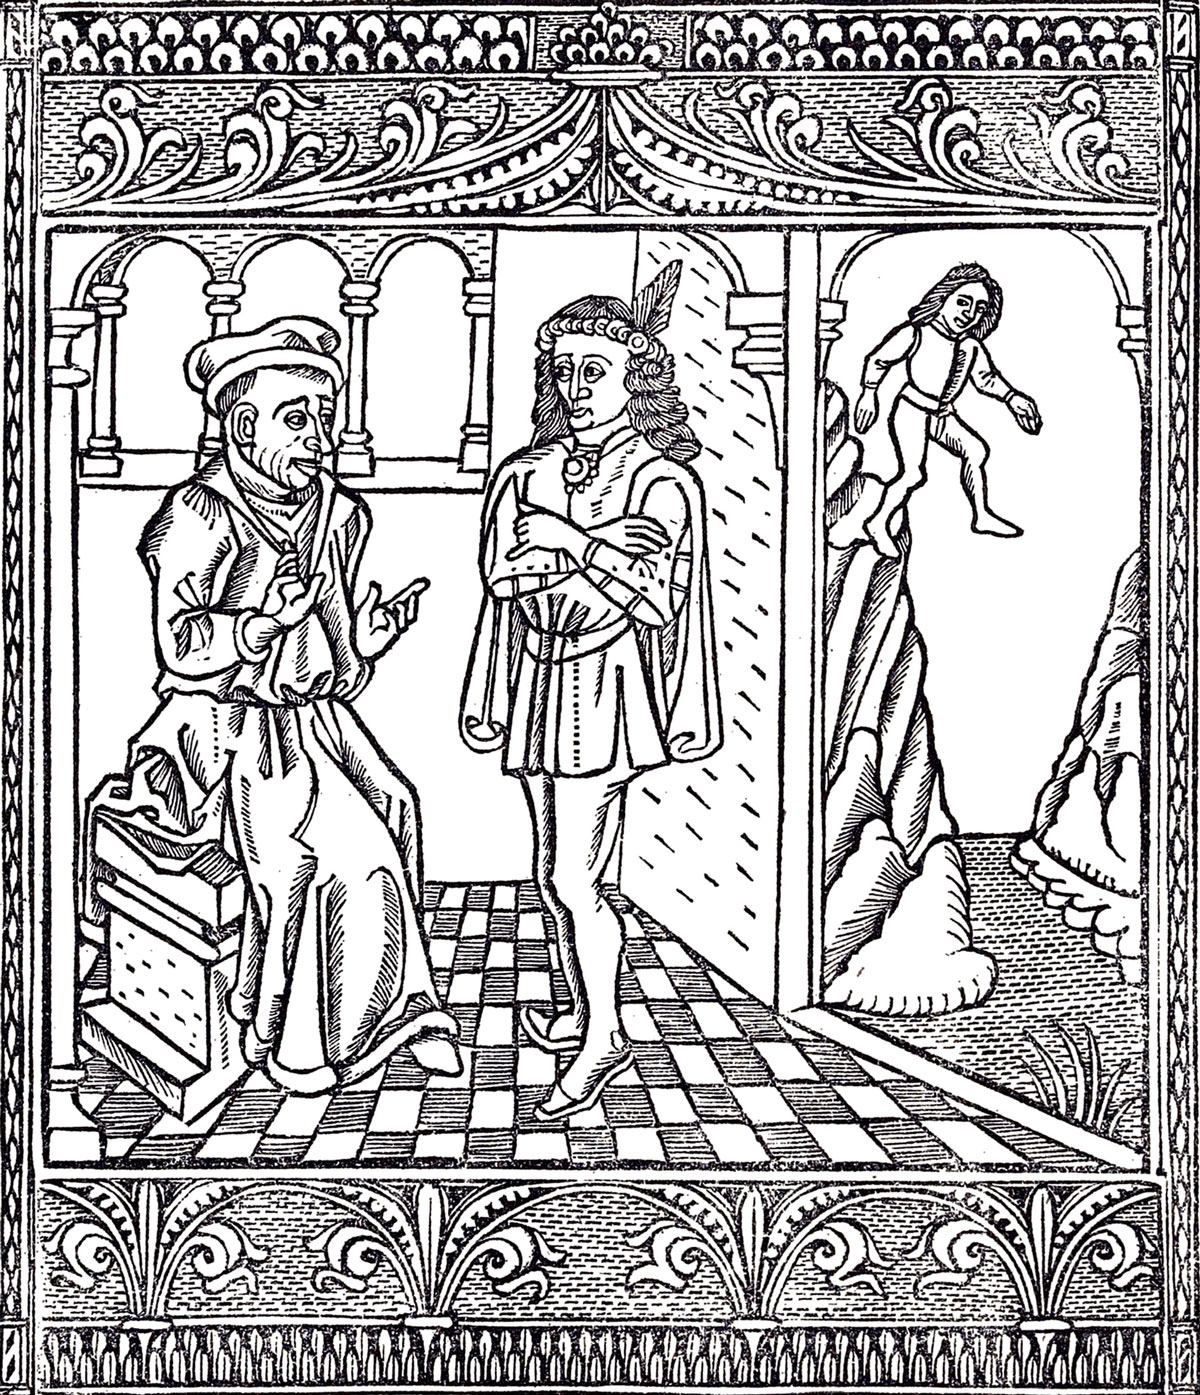 A woodcut illustration from the 1485 edition of “Aesopus Moralitus: Vita, Fabulae.”